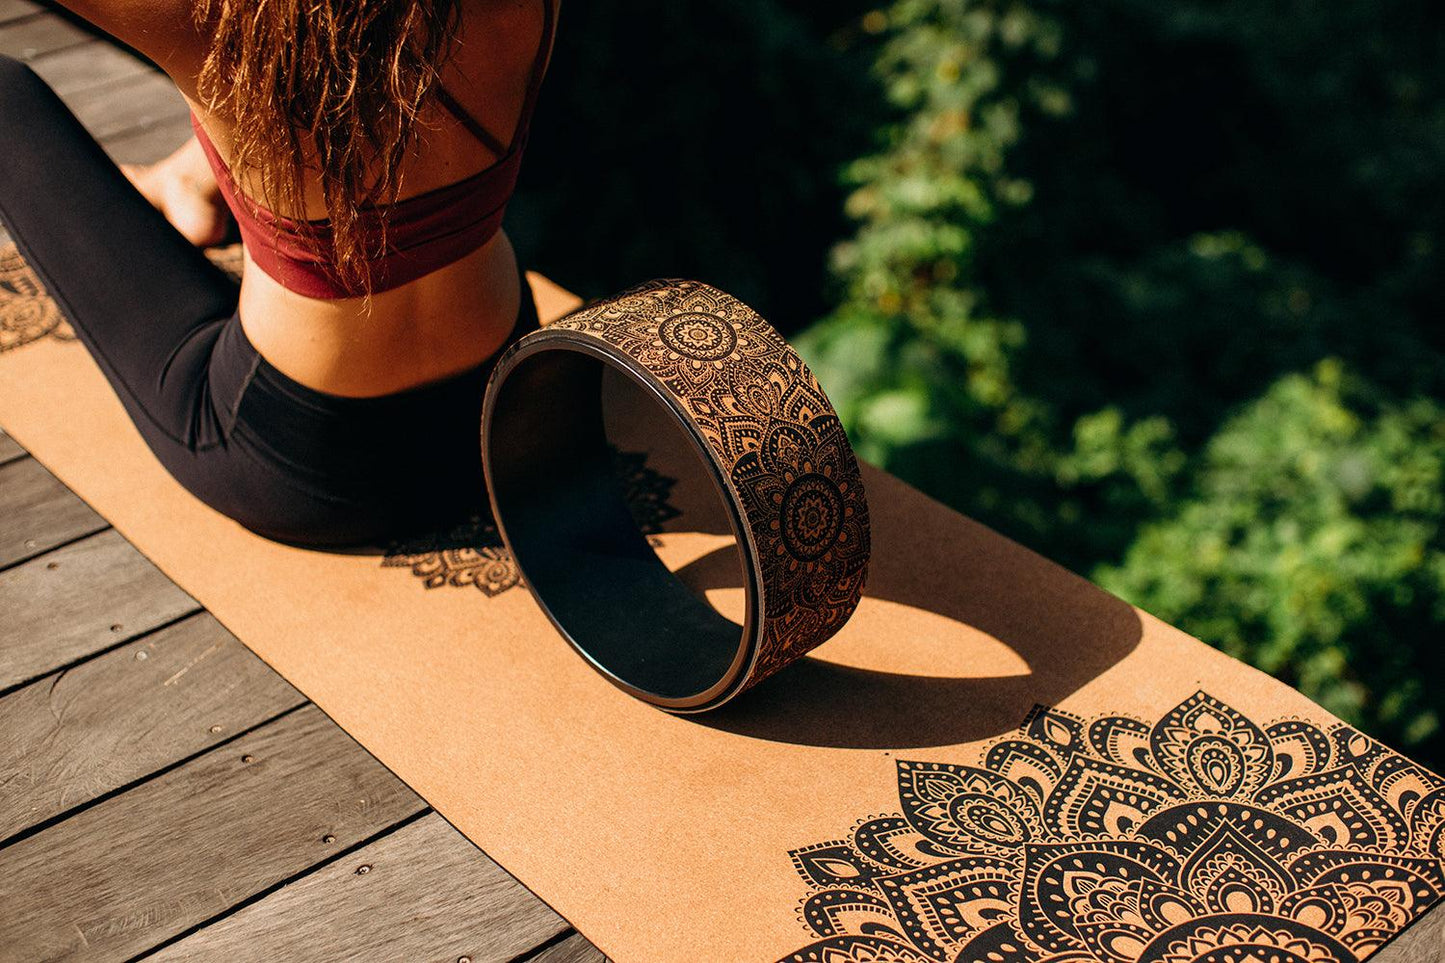 Cork Yoga Wheel - For Enhancing Yoga Poses At Home or Studio